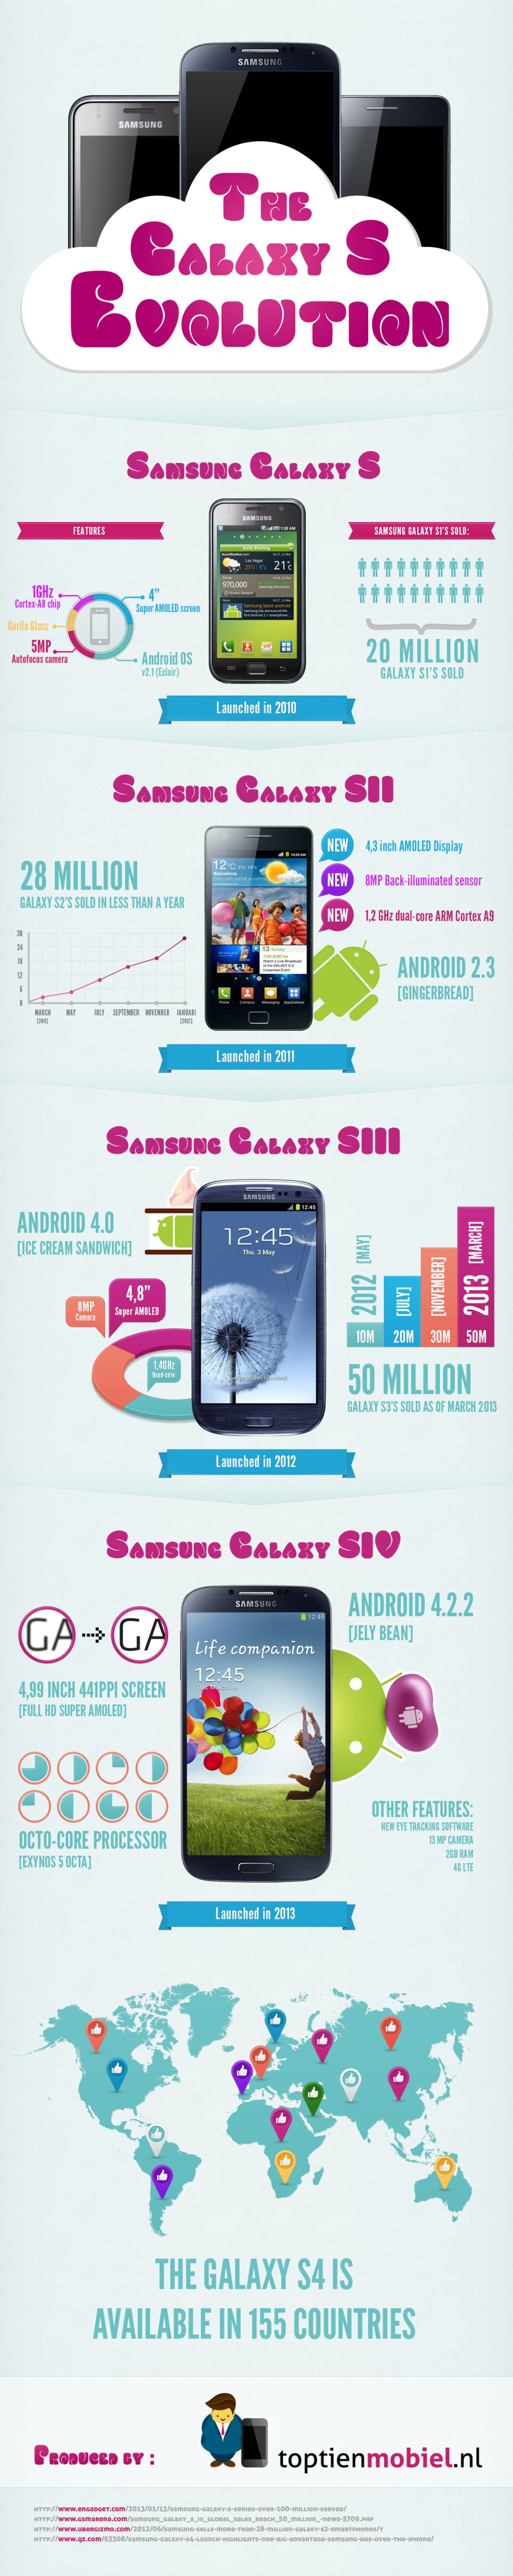 samsung-galaxy-s-evolution-infographic